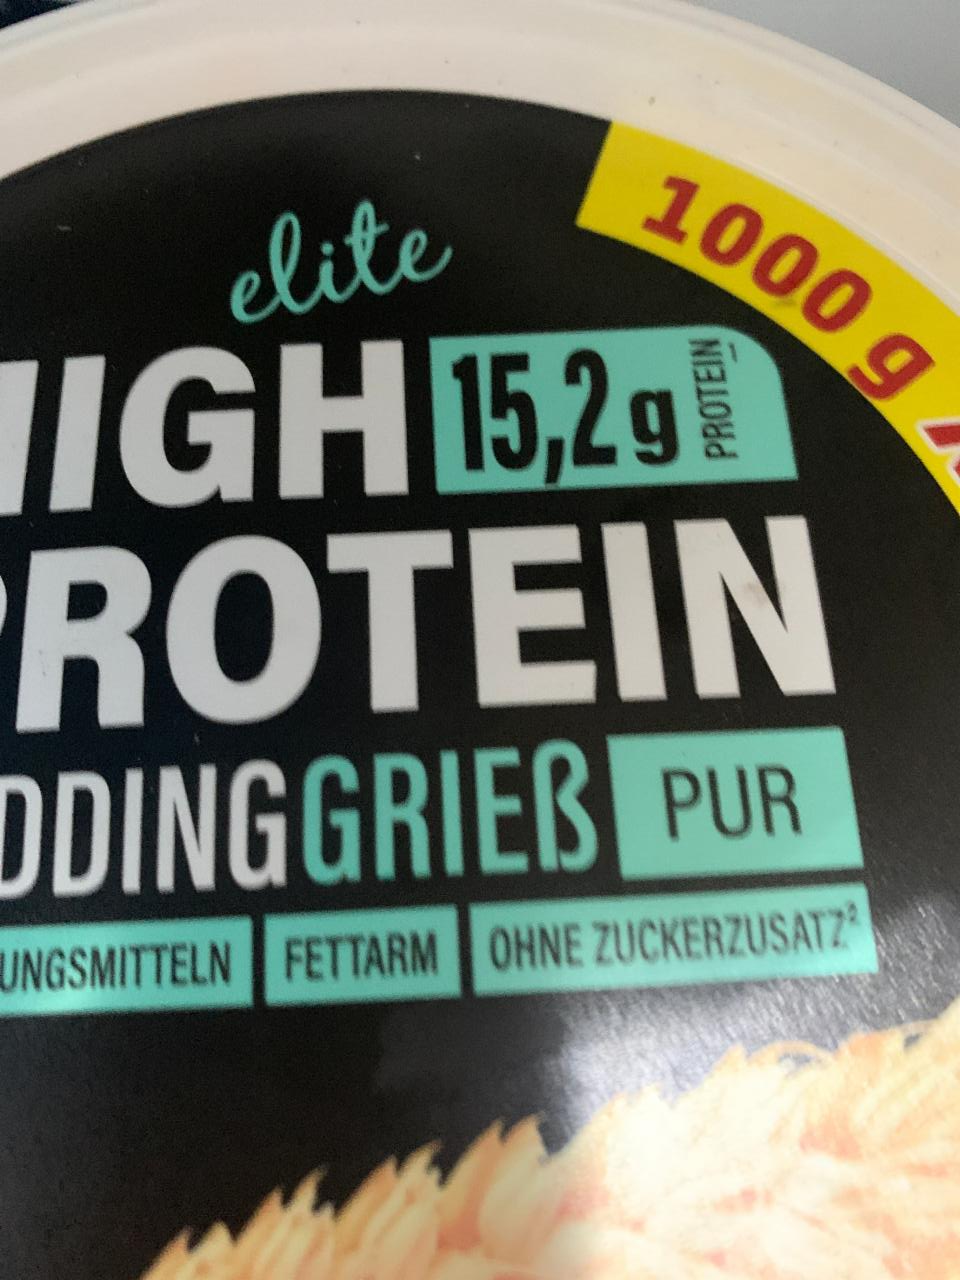 Fotografie - high Protein Pudding Grieß